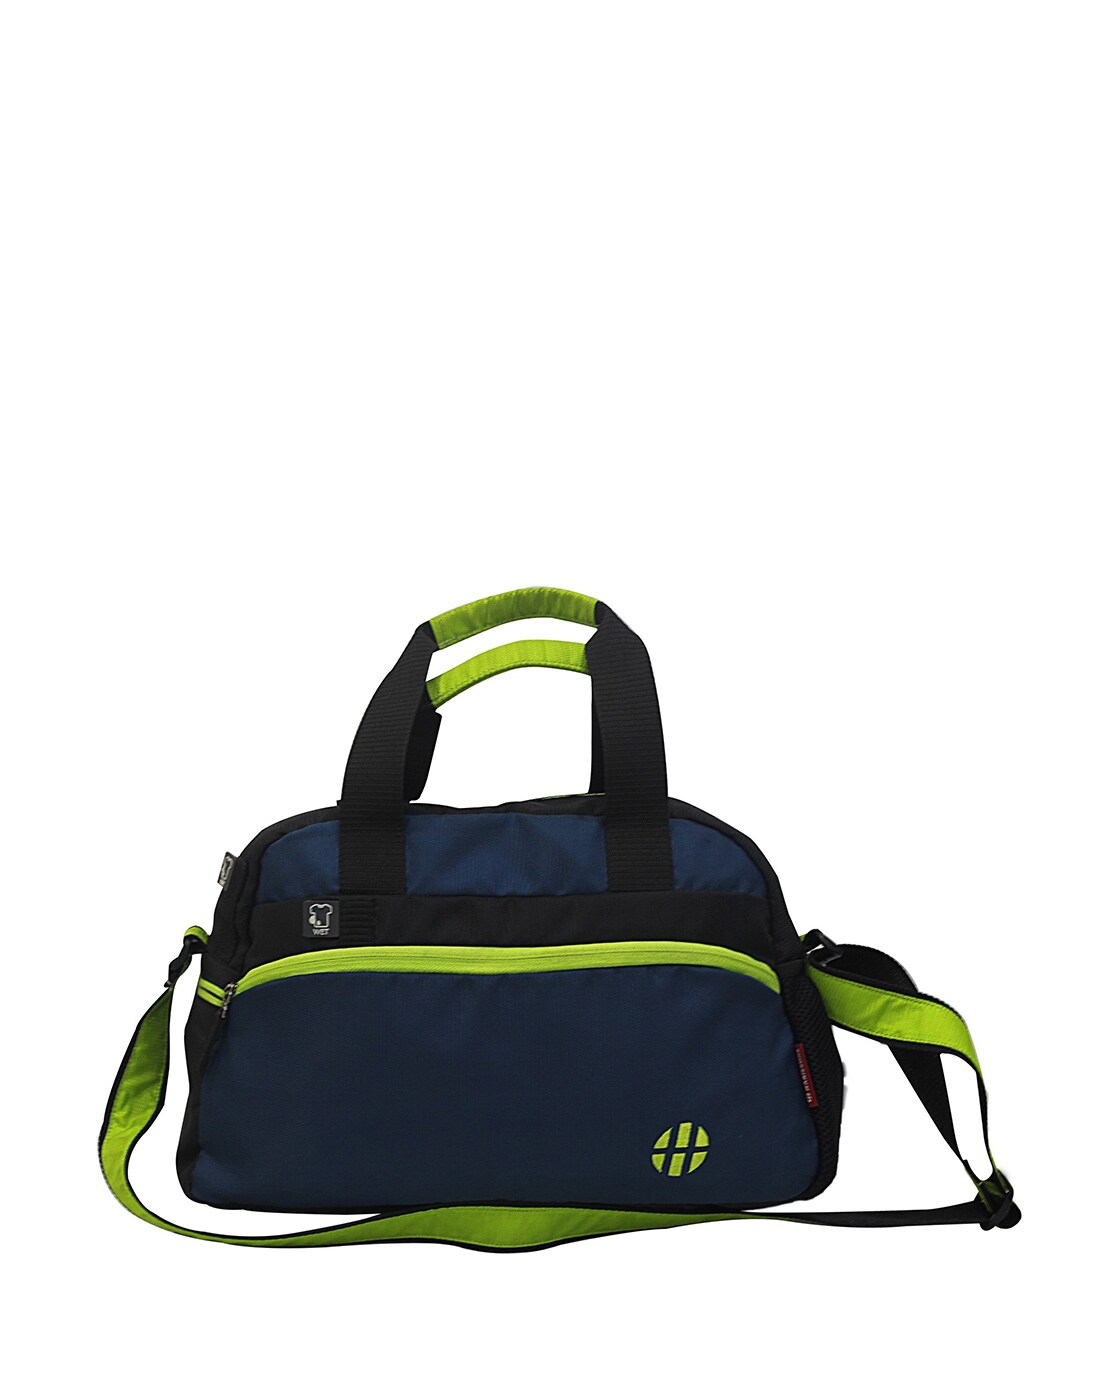 Buy Blue  Grey Travel Bags for Men by SPYKAR Online  Ajiocom